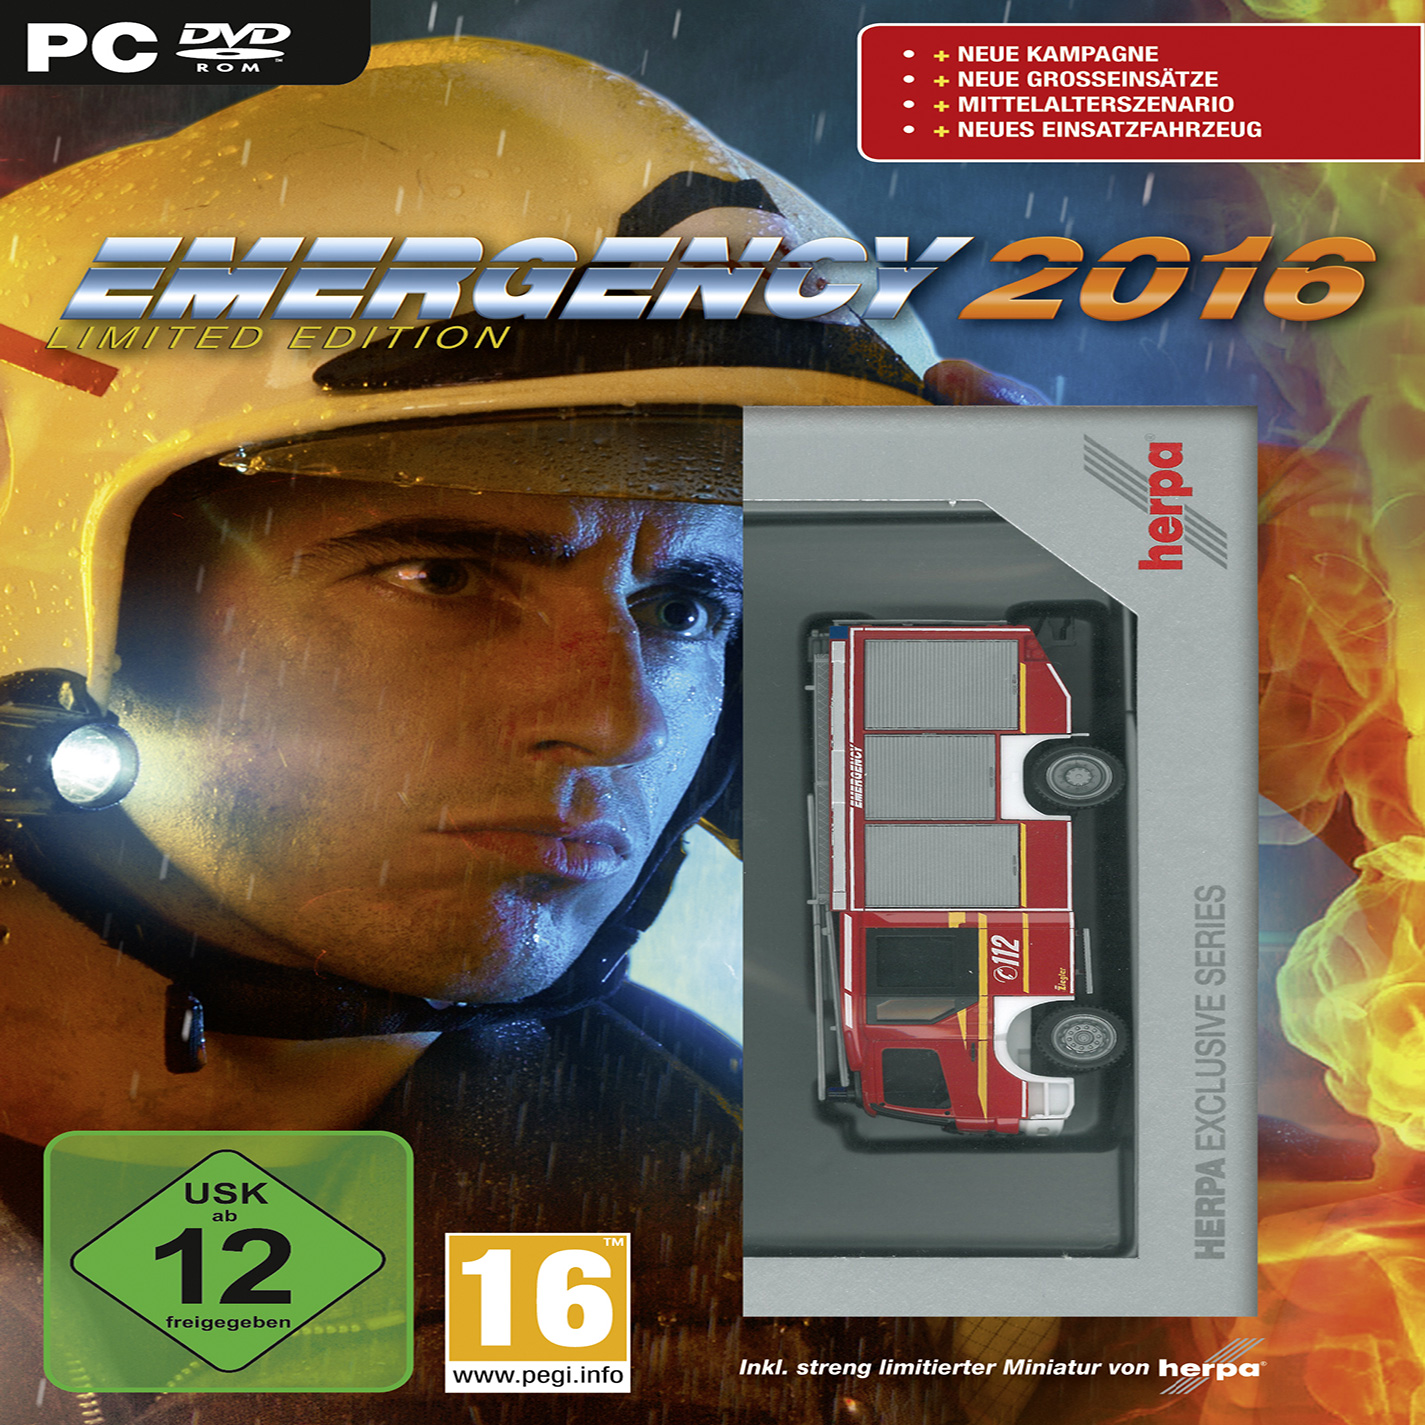 Emergency 2016 - pedn CD obal 2